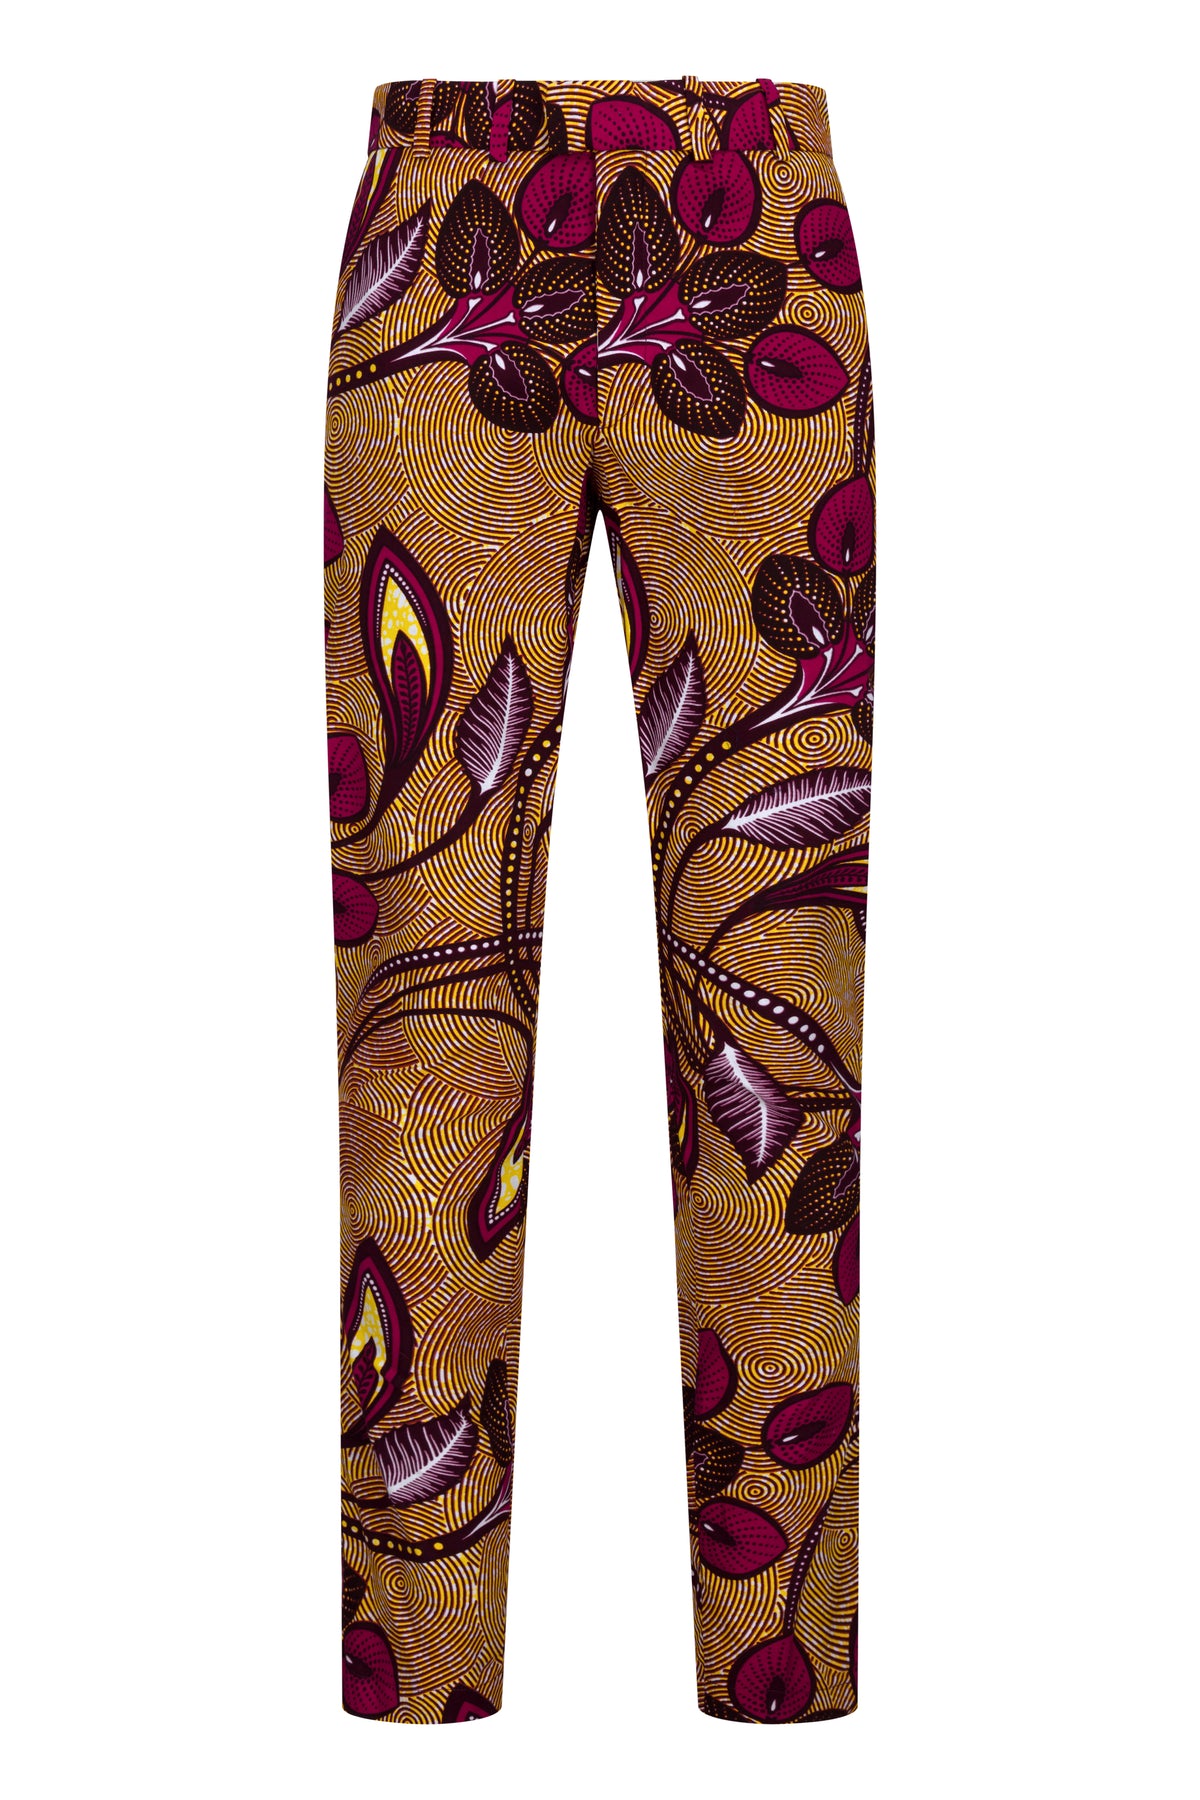 Osei straight leg trousers-Wine Floral - OHEMA OHENE AFRICAN INSPIRED FASHION